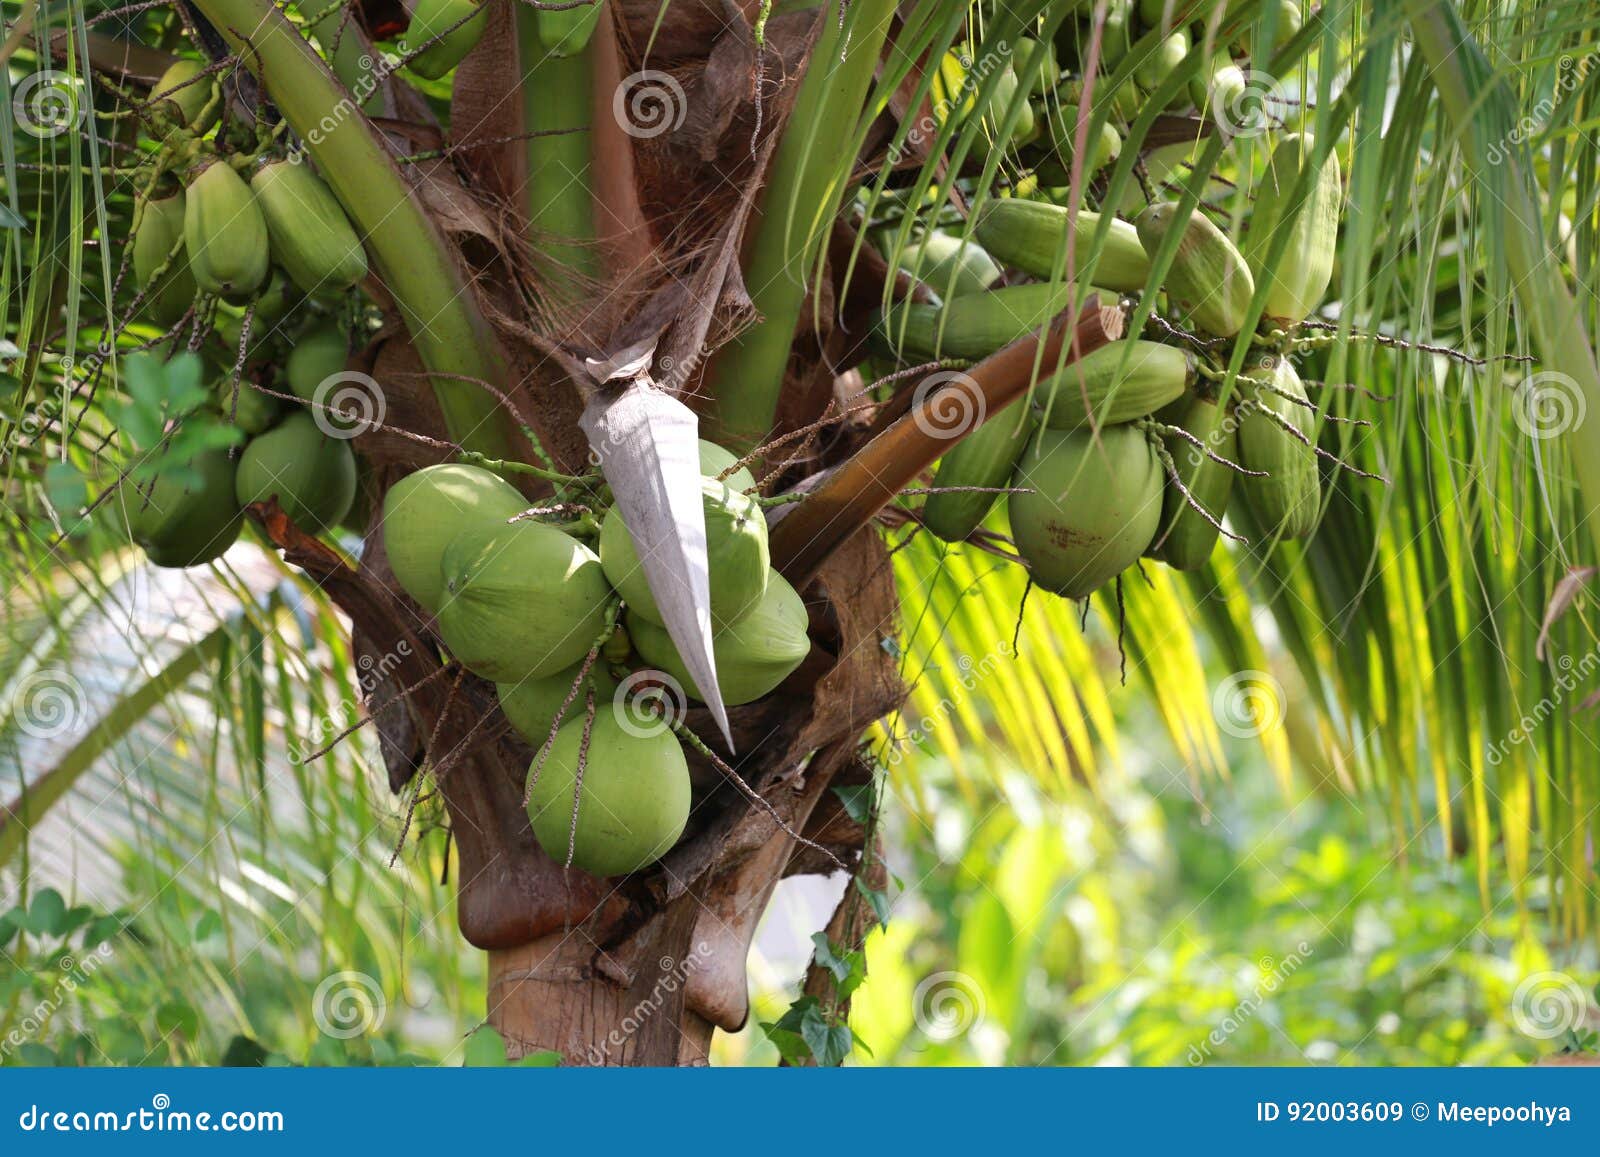 Coconut Fruit On Coconut Tree In Garden Thailand. Stock Image - Image ...